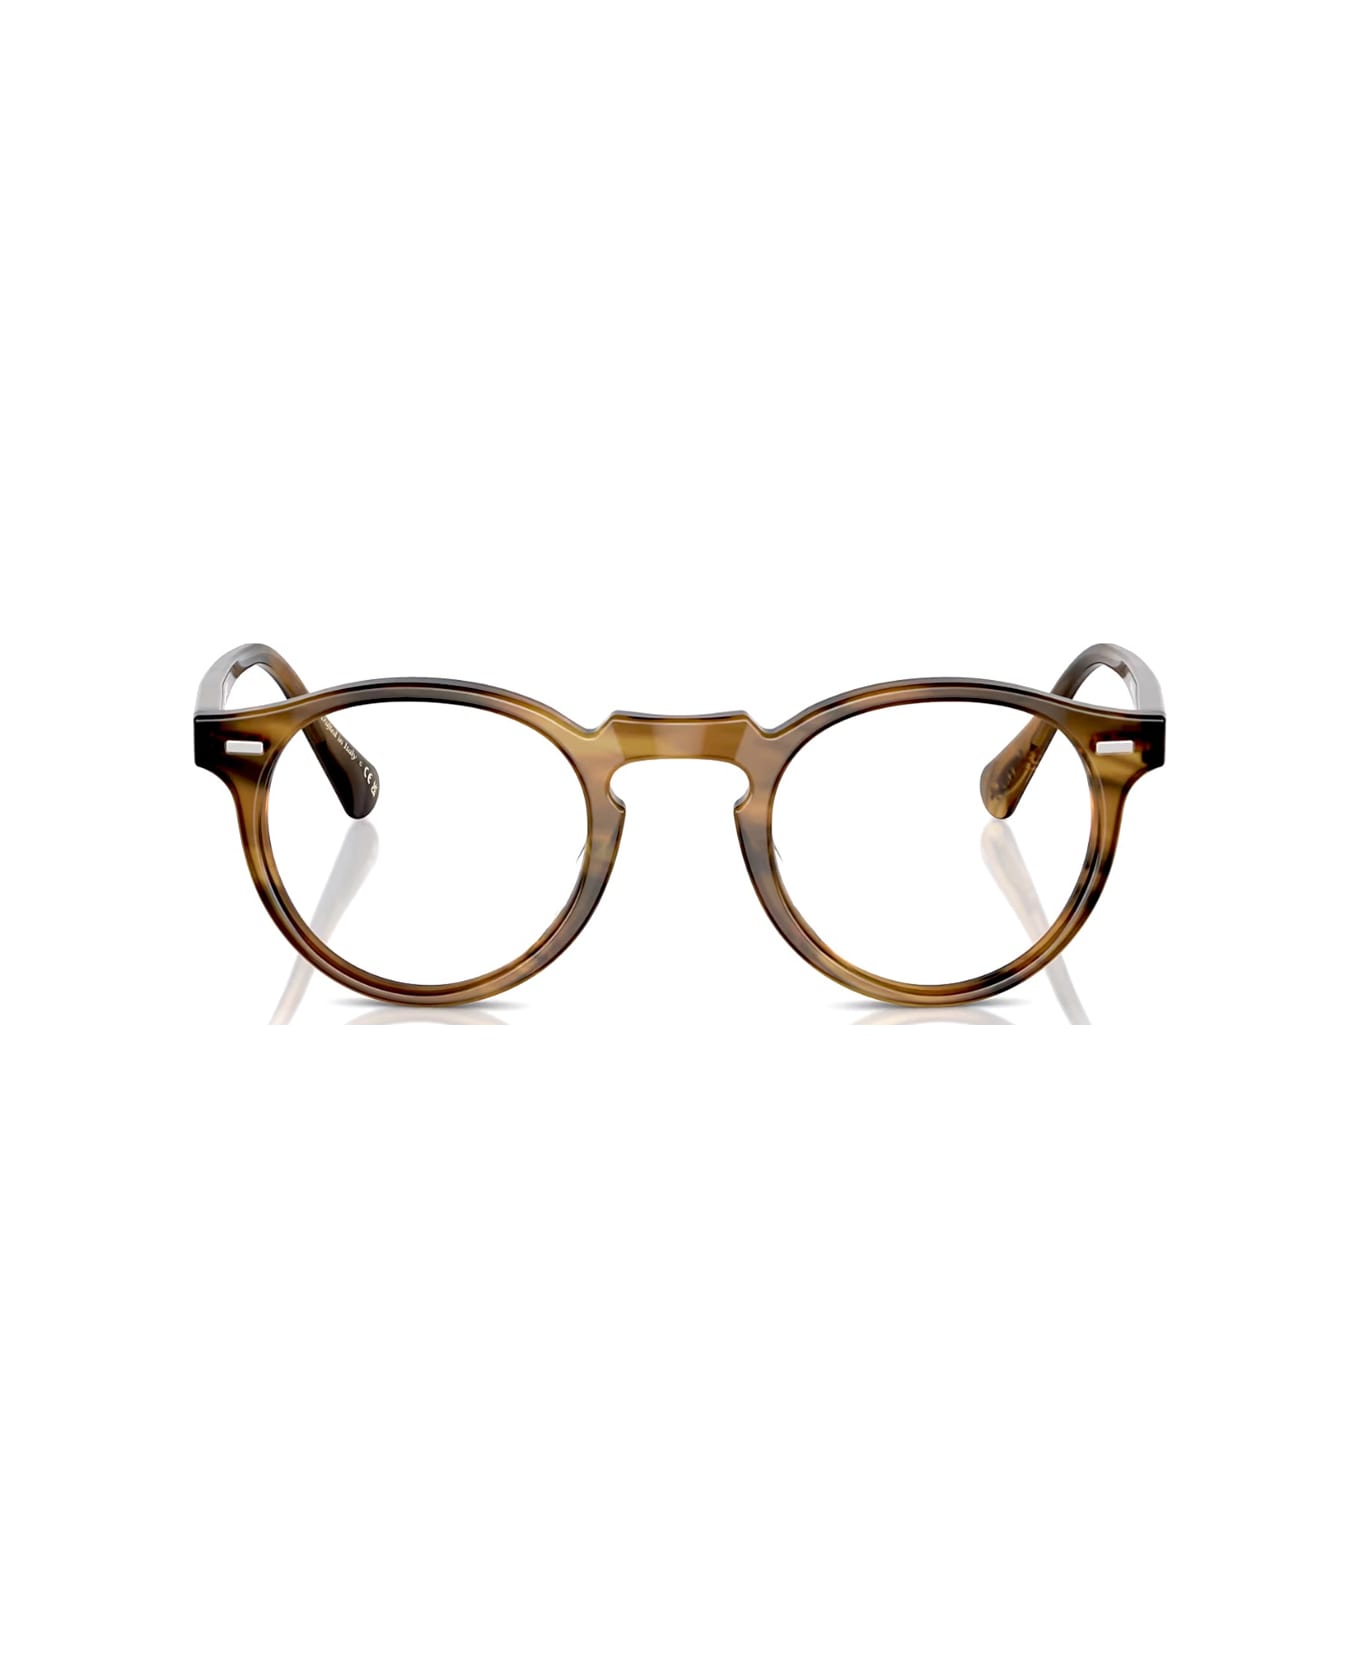 Oliver Peoples Ov5186 - Gregory Peck 1011 Glasses - Marrone